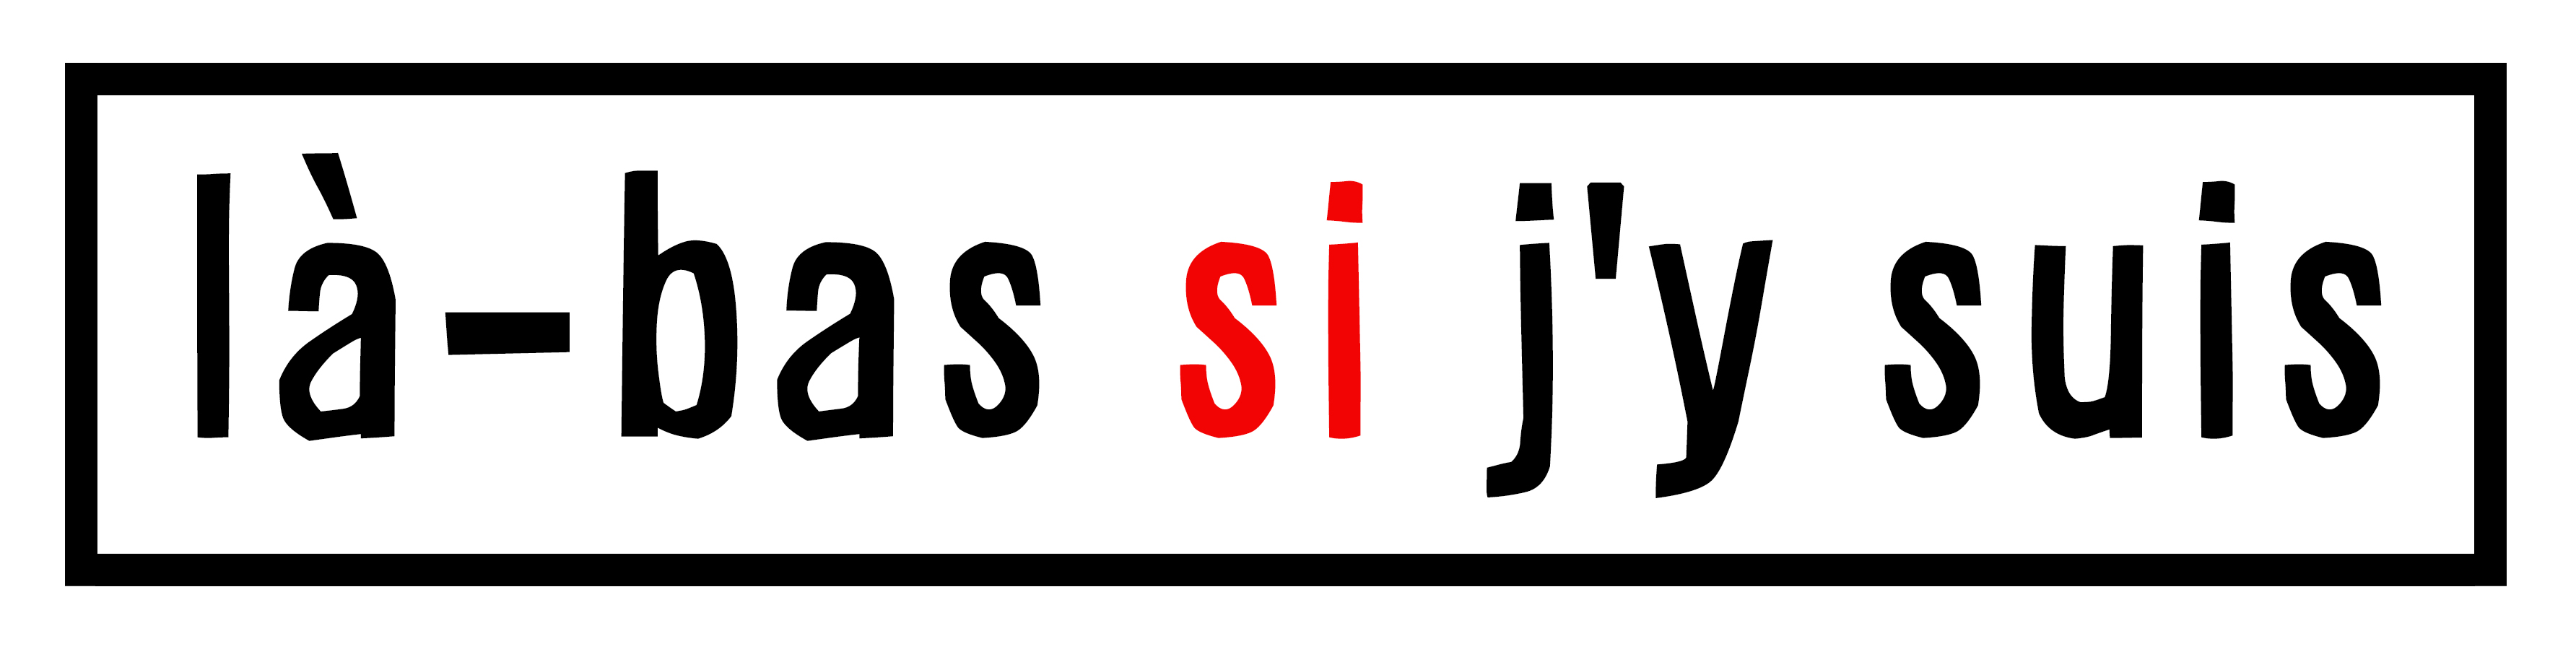 i4Yyc-logo.jpg